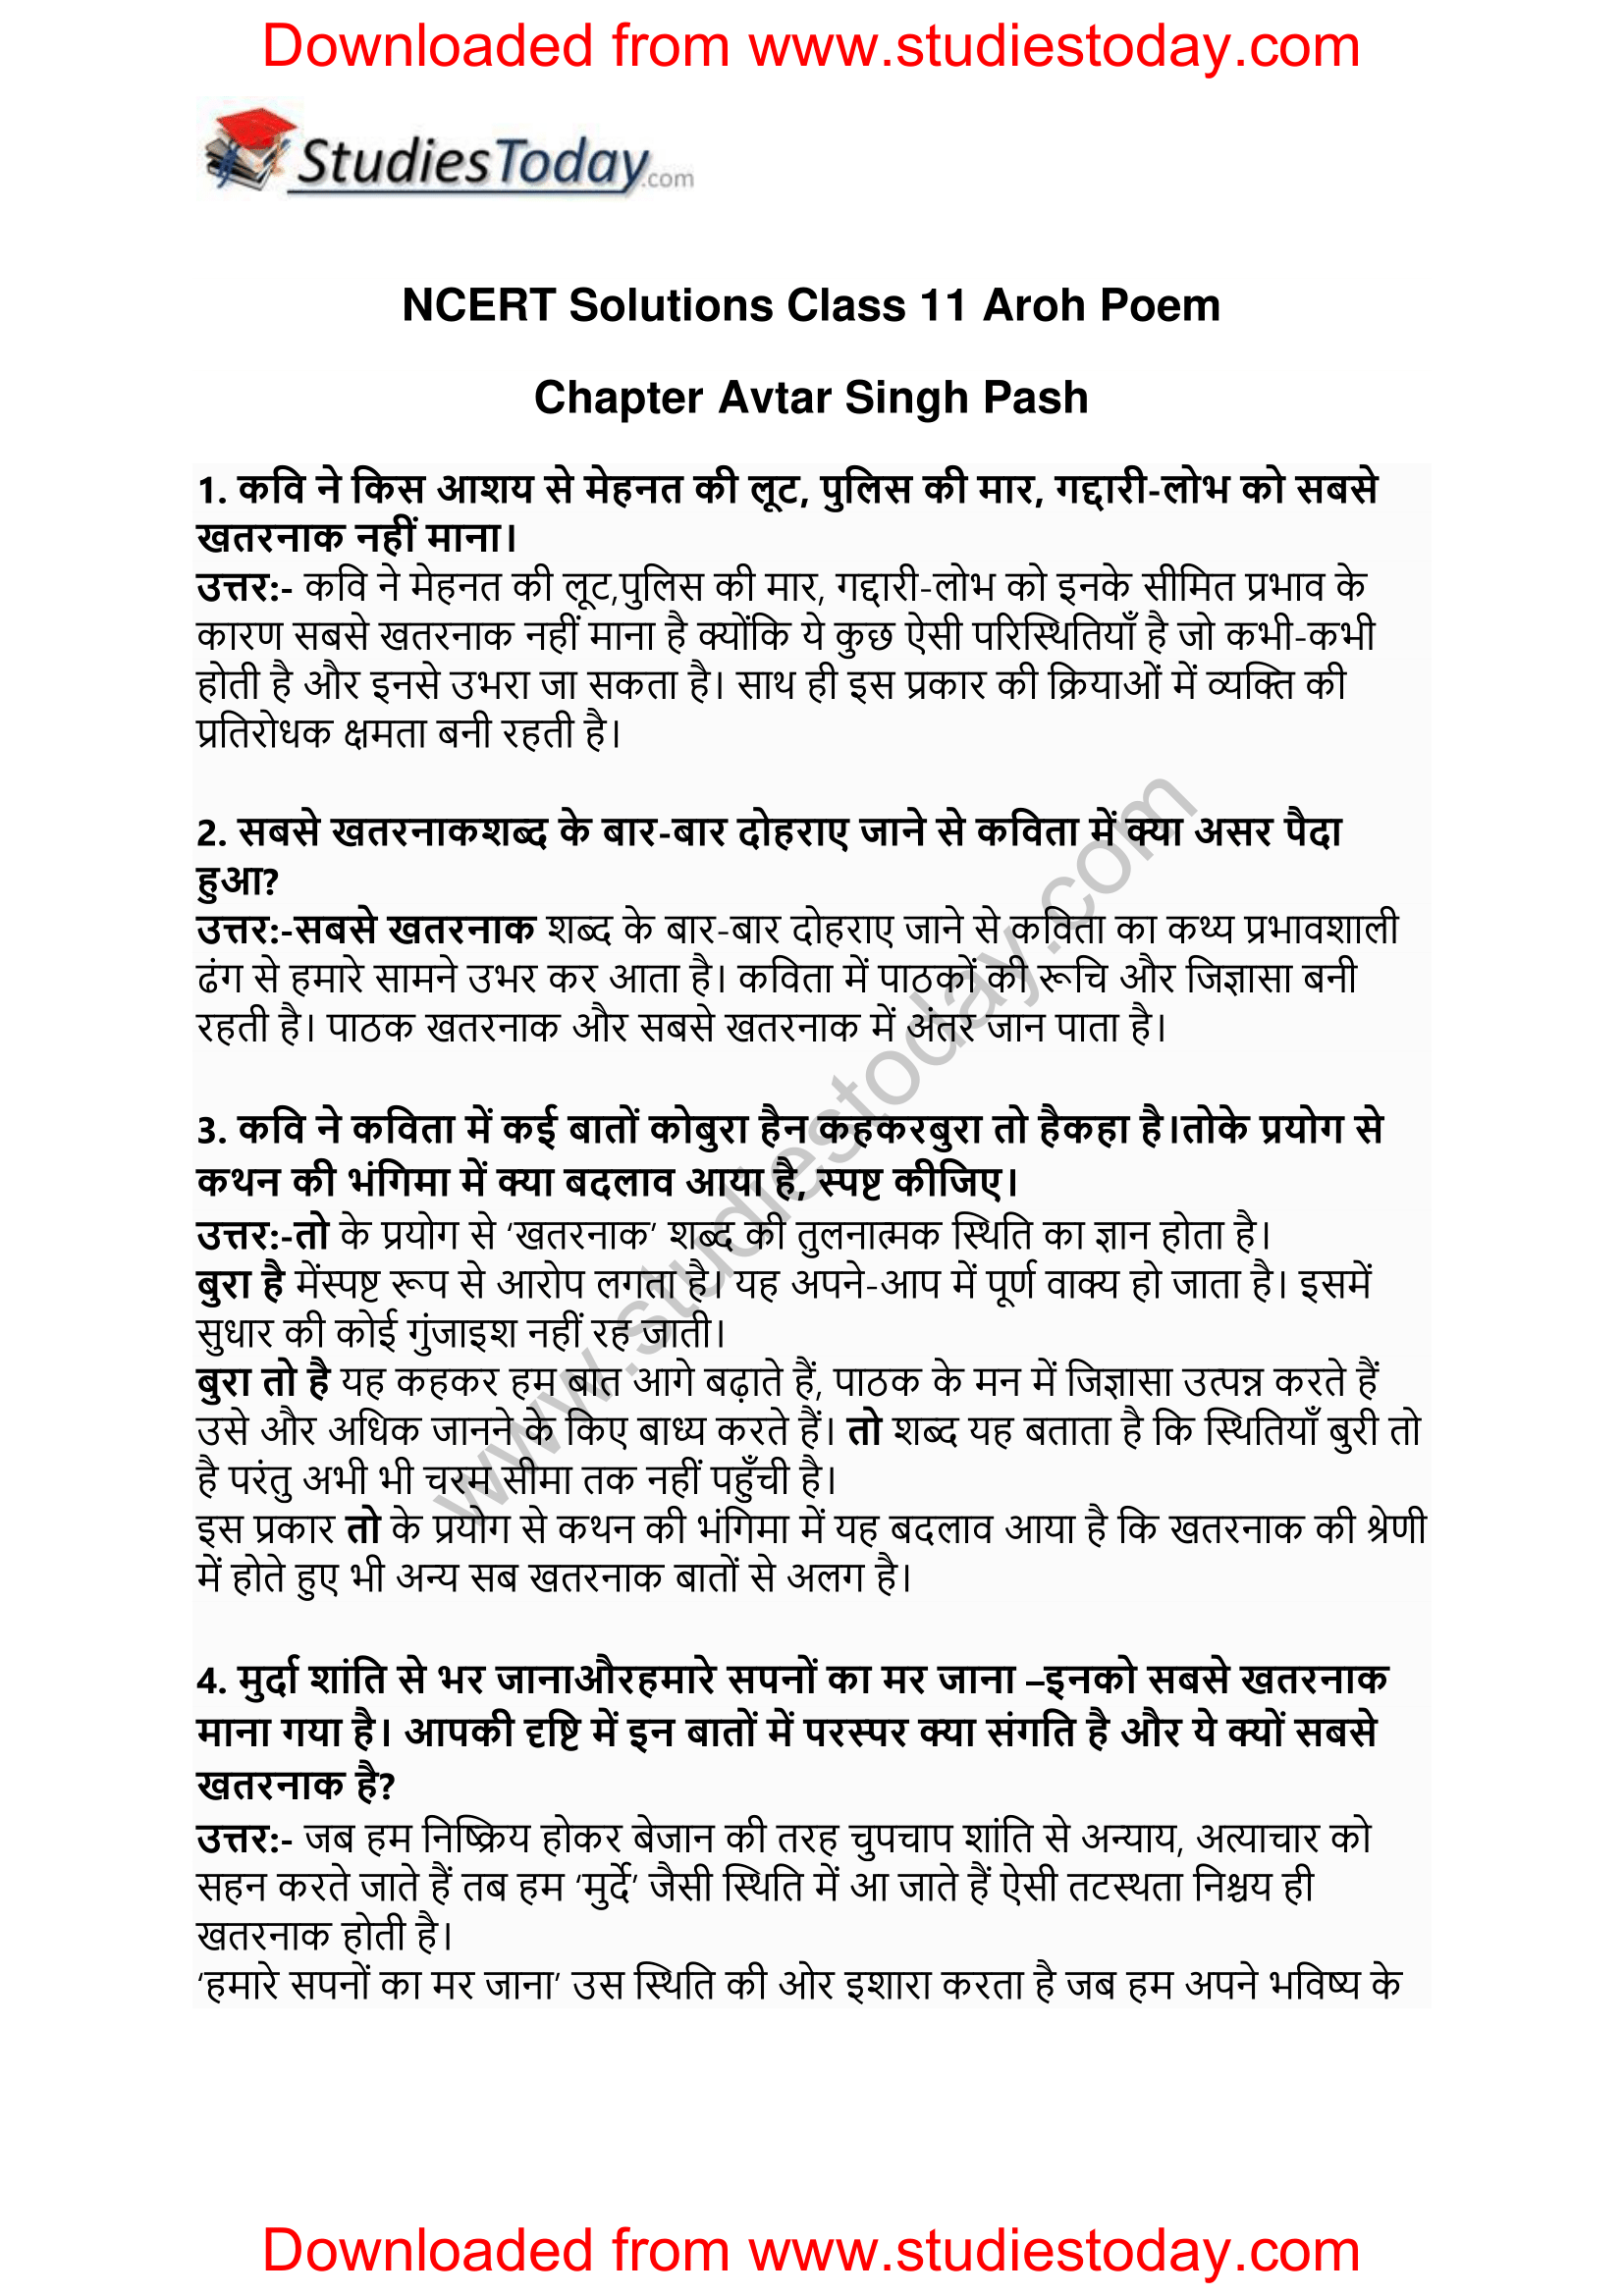 NCERT-Solutions-Class-11-Hindi-Aroh-Poem-Avtar-Singh-Pash-1